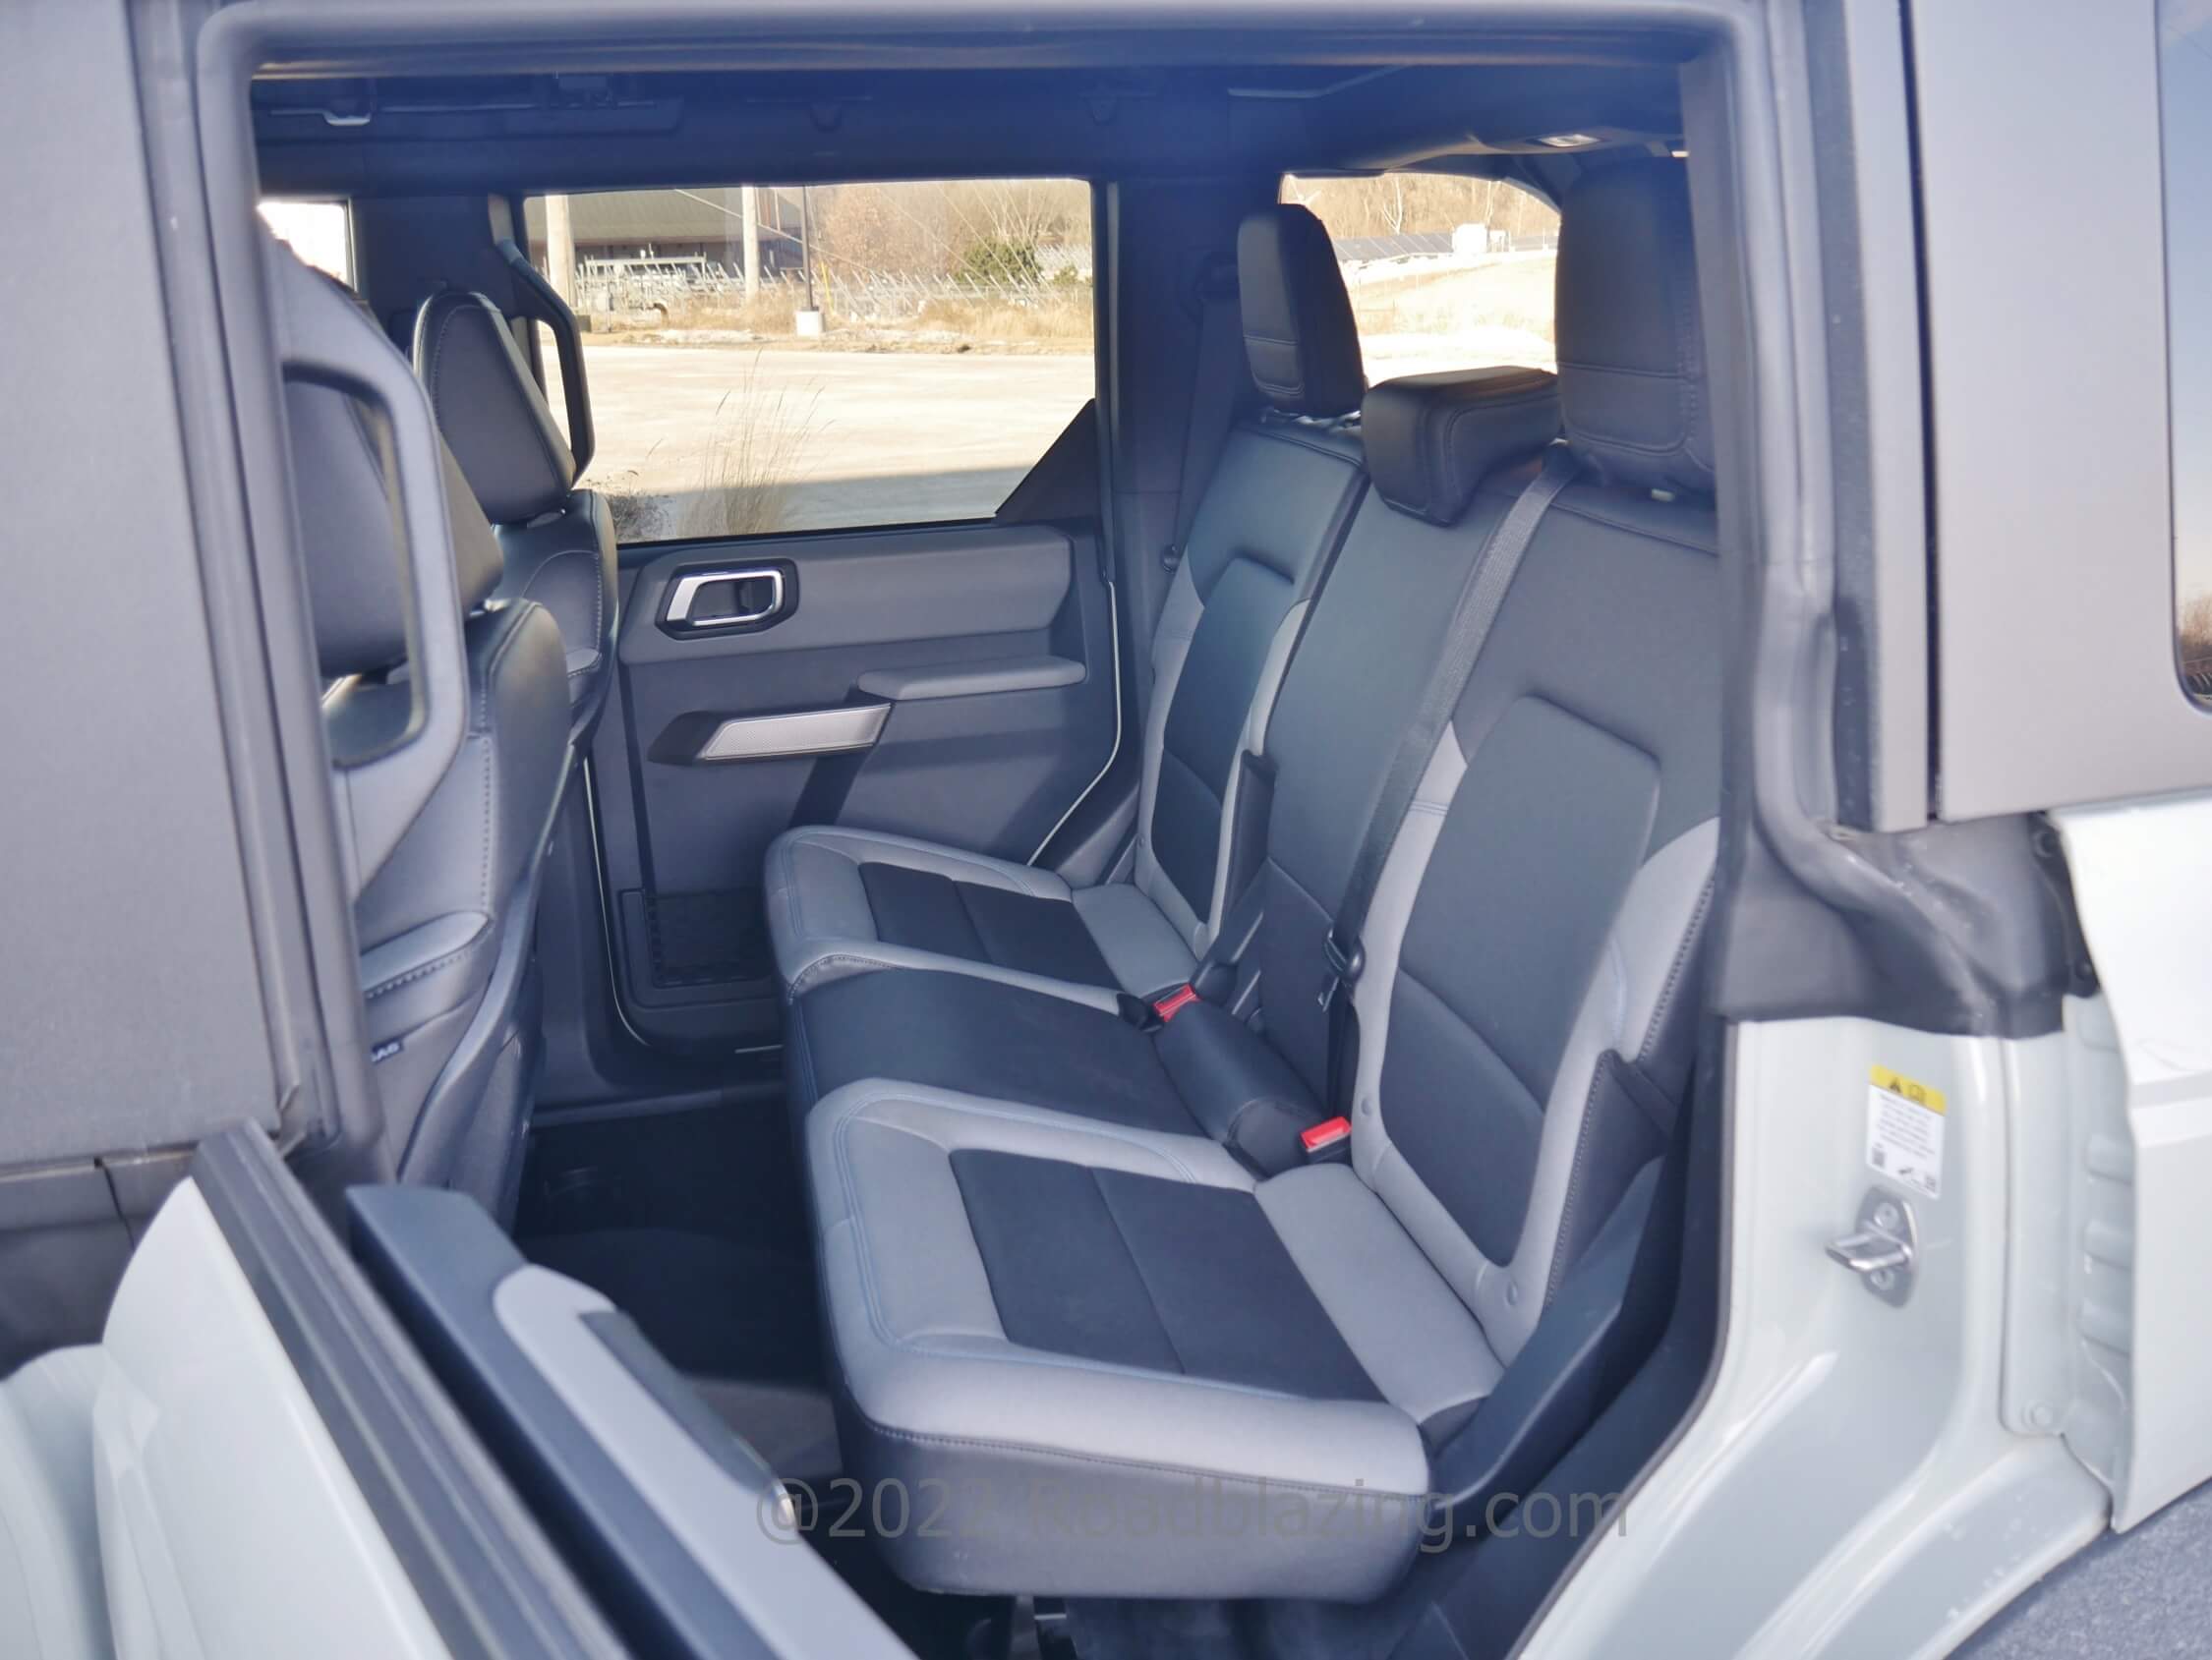 2021 Ford Bronco 4-Door Black Diamond 4x4 2.3T: Row 2 bench seating